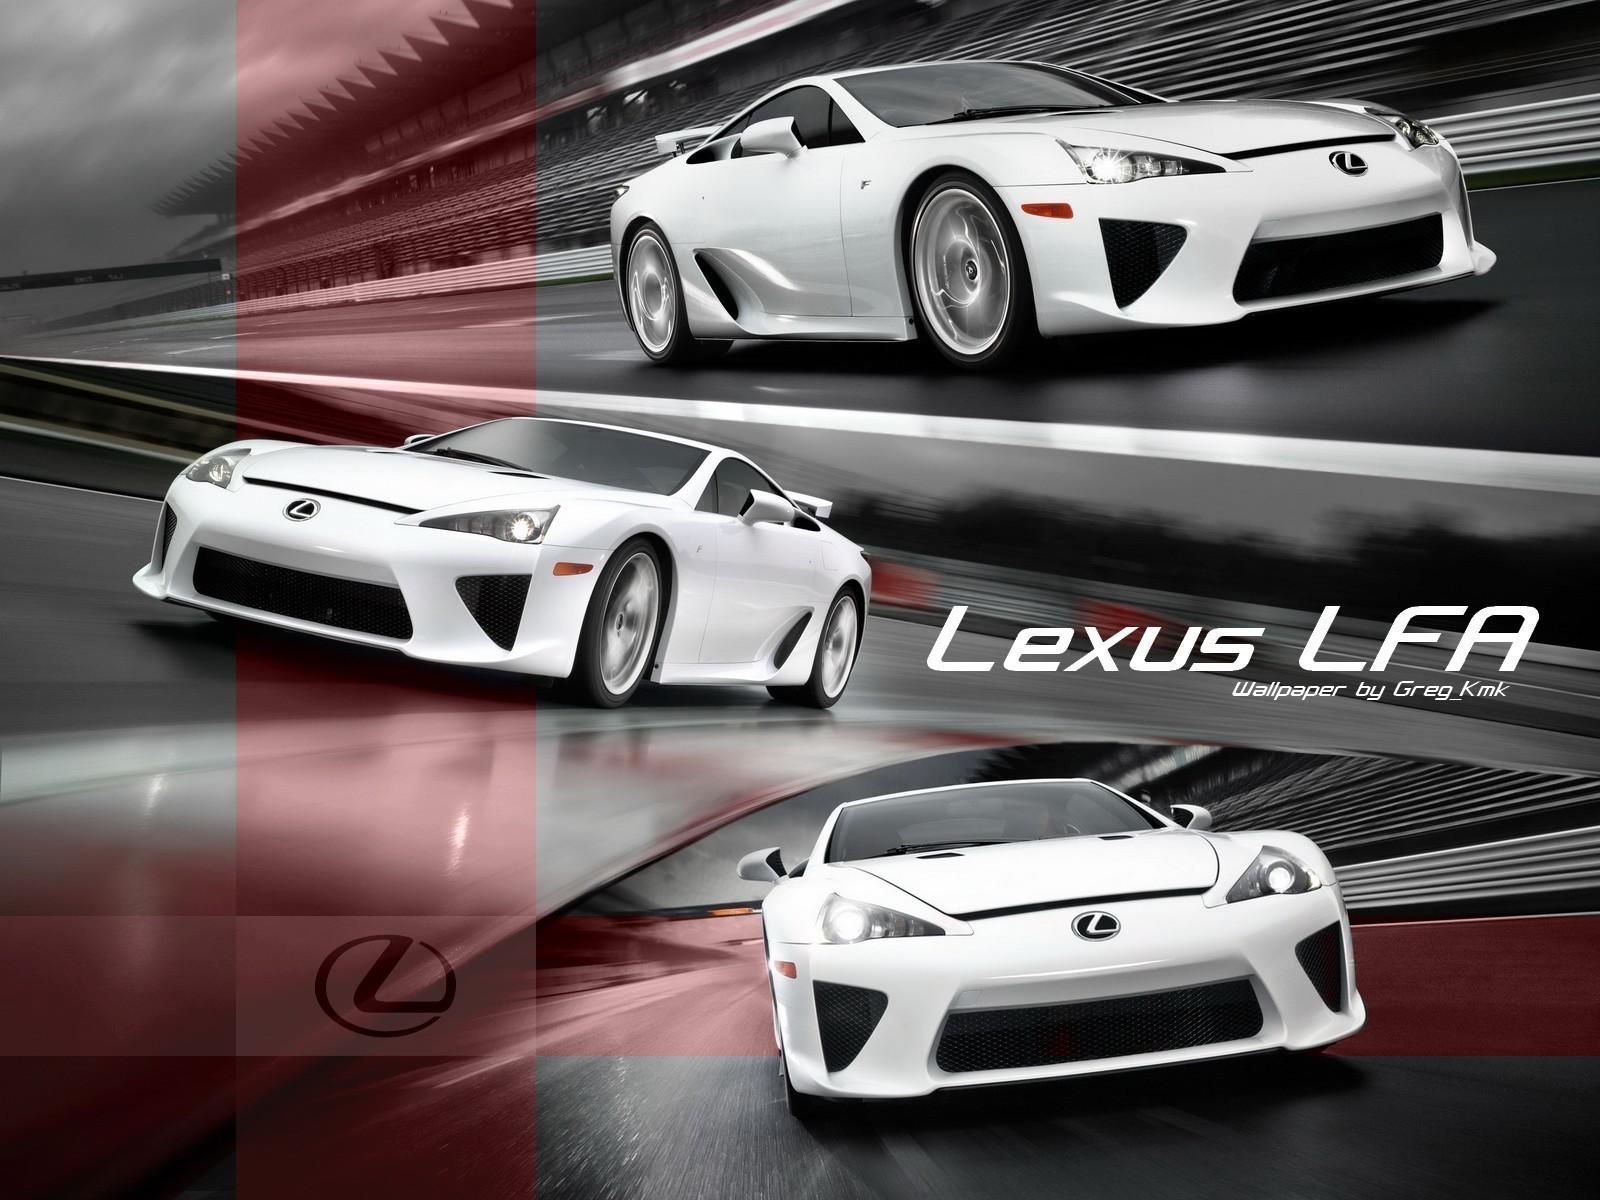 Lexus Lfa Background Image for Laptop WP Collection